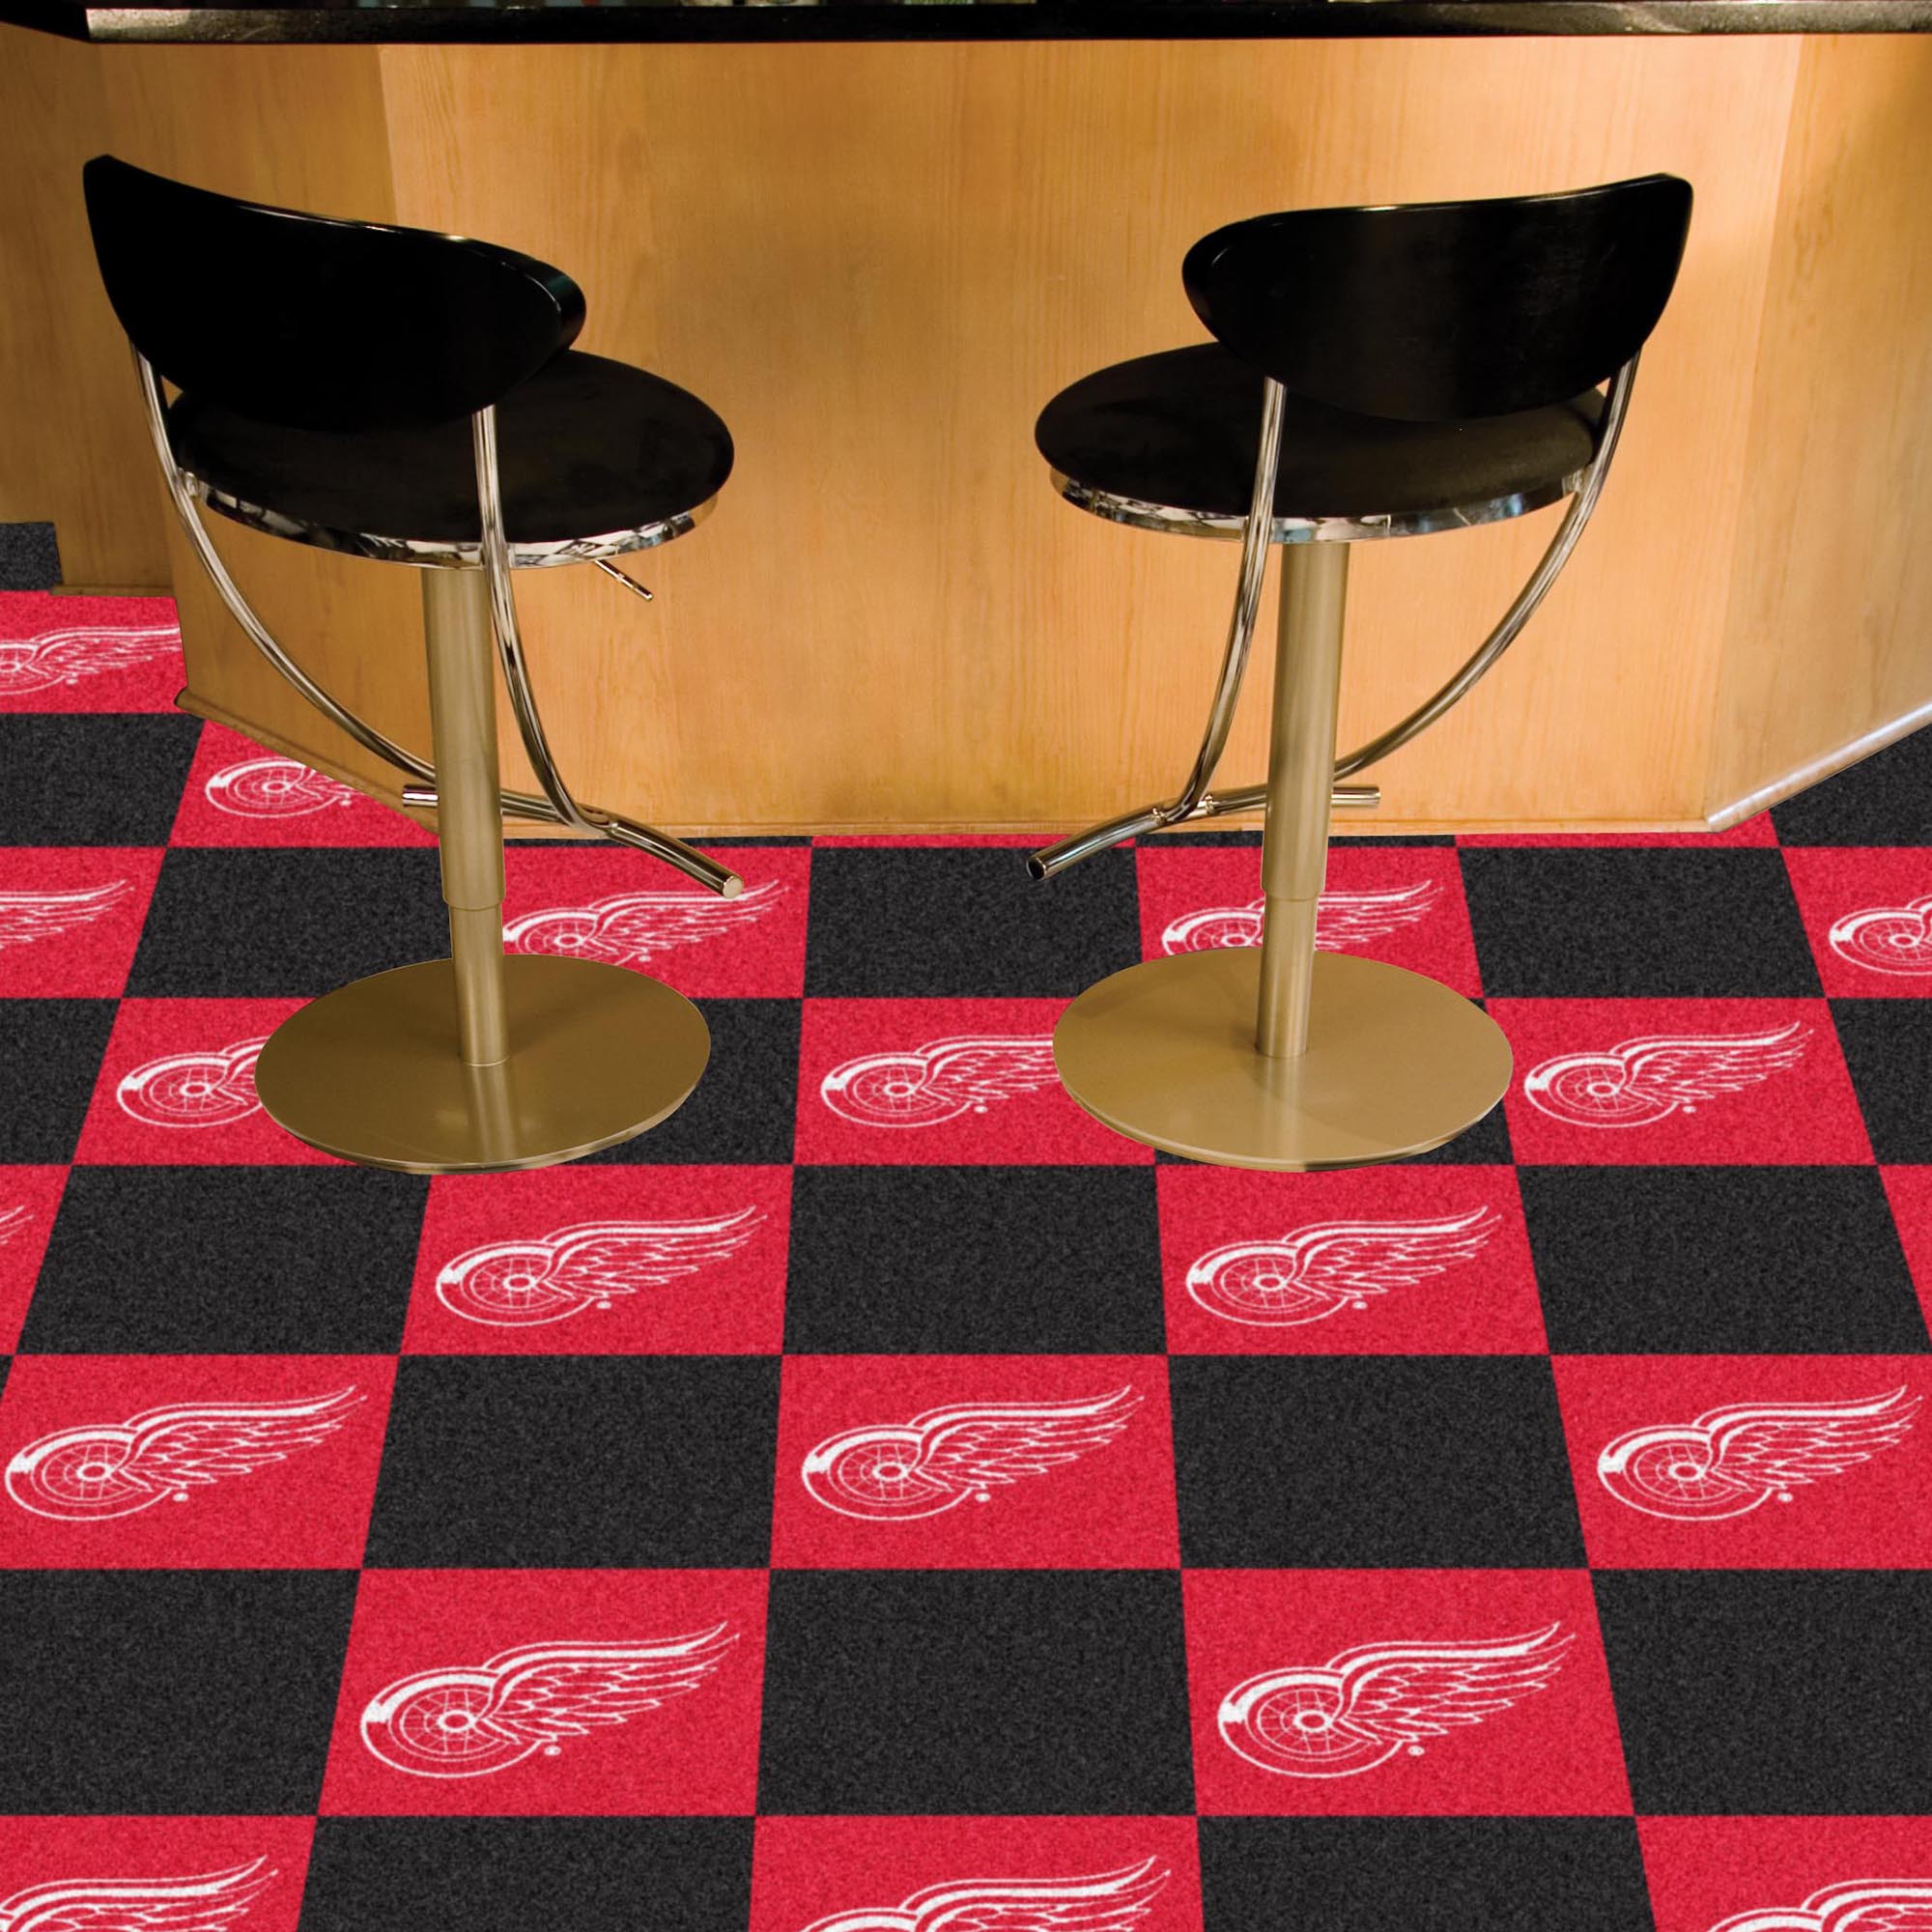 Detroit Red Wings Carpet Tiles 18x18 in.